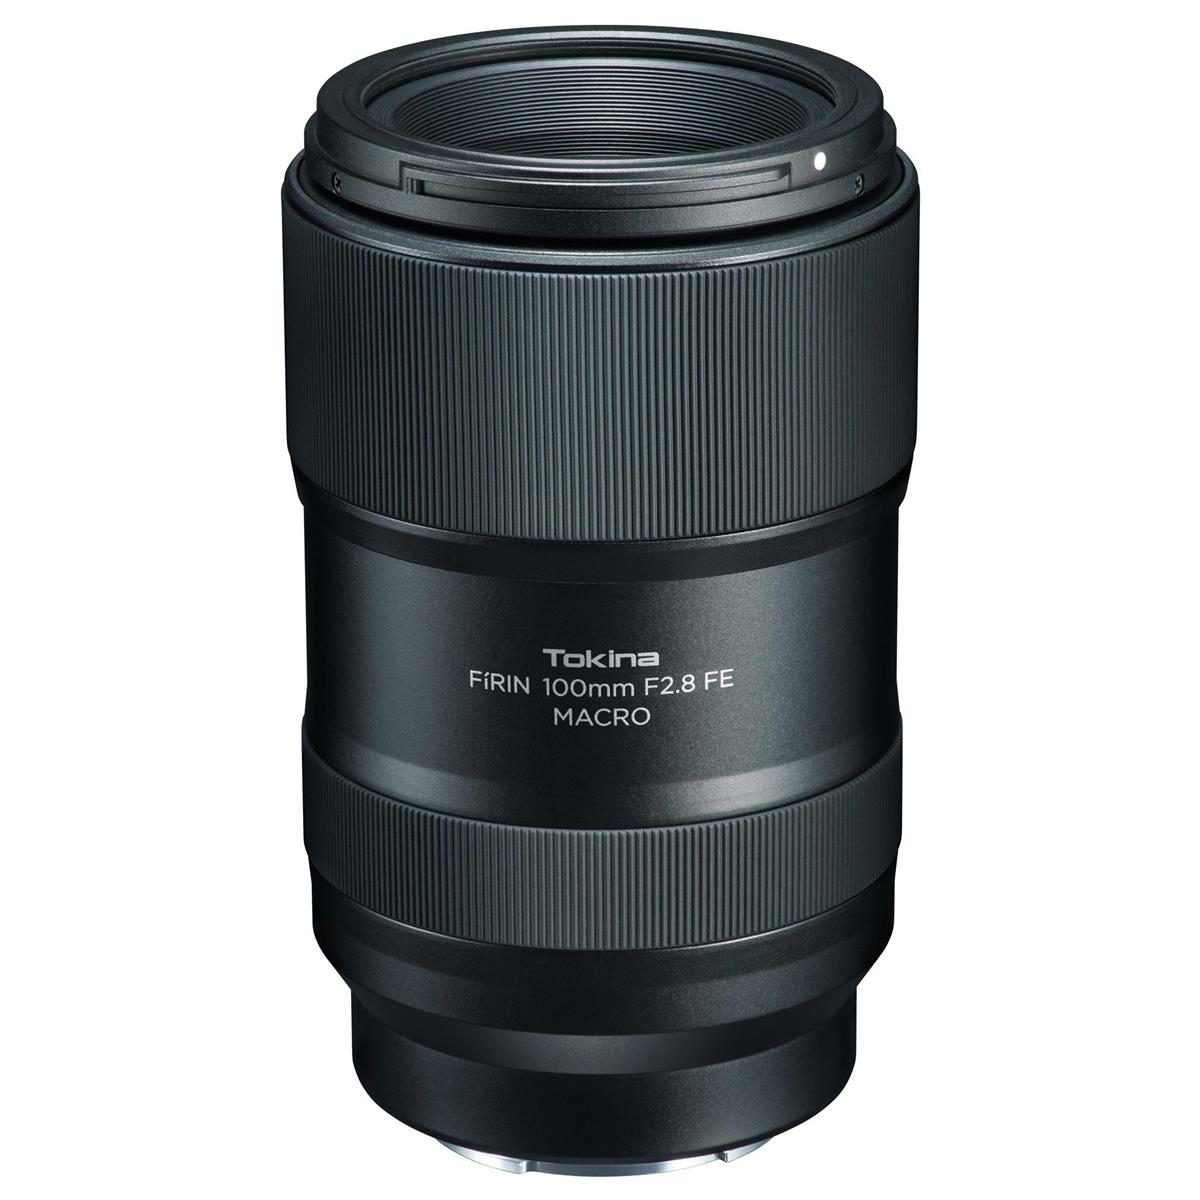 

Tokina FiRIN AF 100mm f/2.8 FE Macro Lens for Sony E